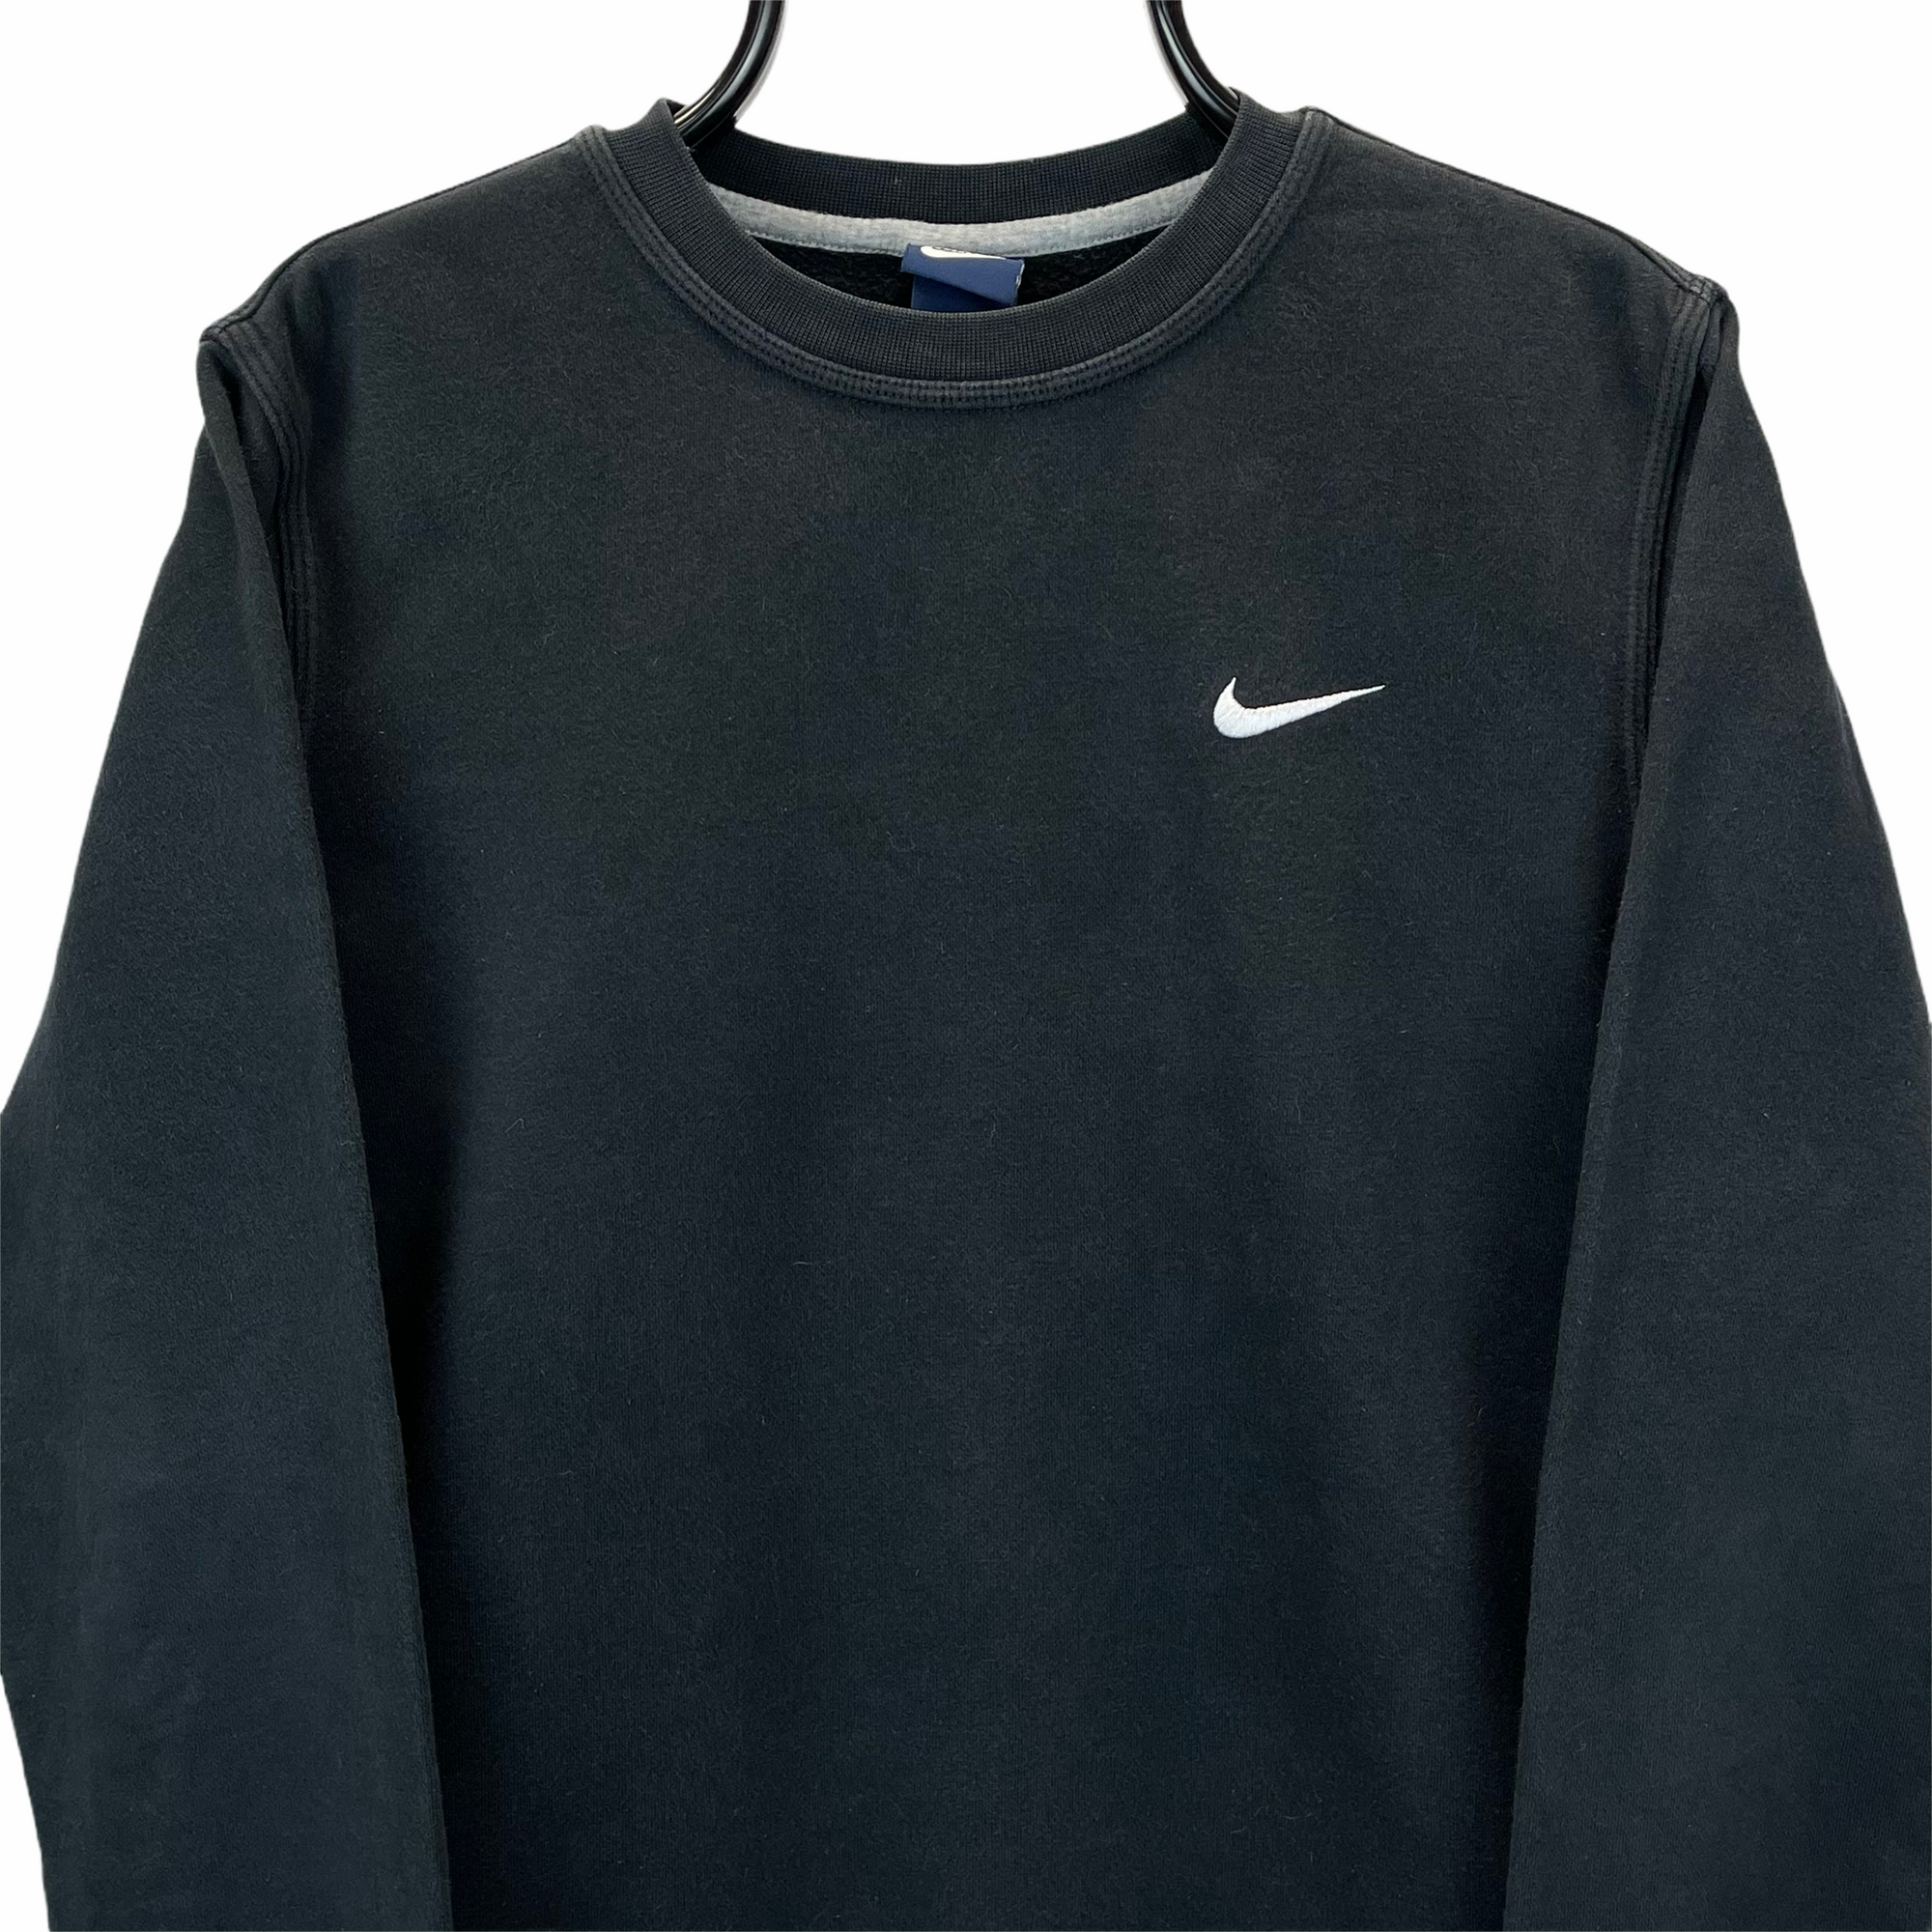 Nike Embroidered Small Logo Sweatshirt in Black - Men's Small/Women's Medium